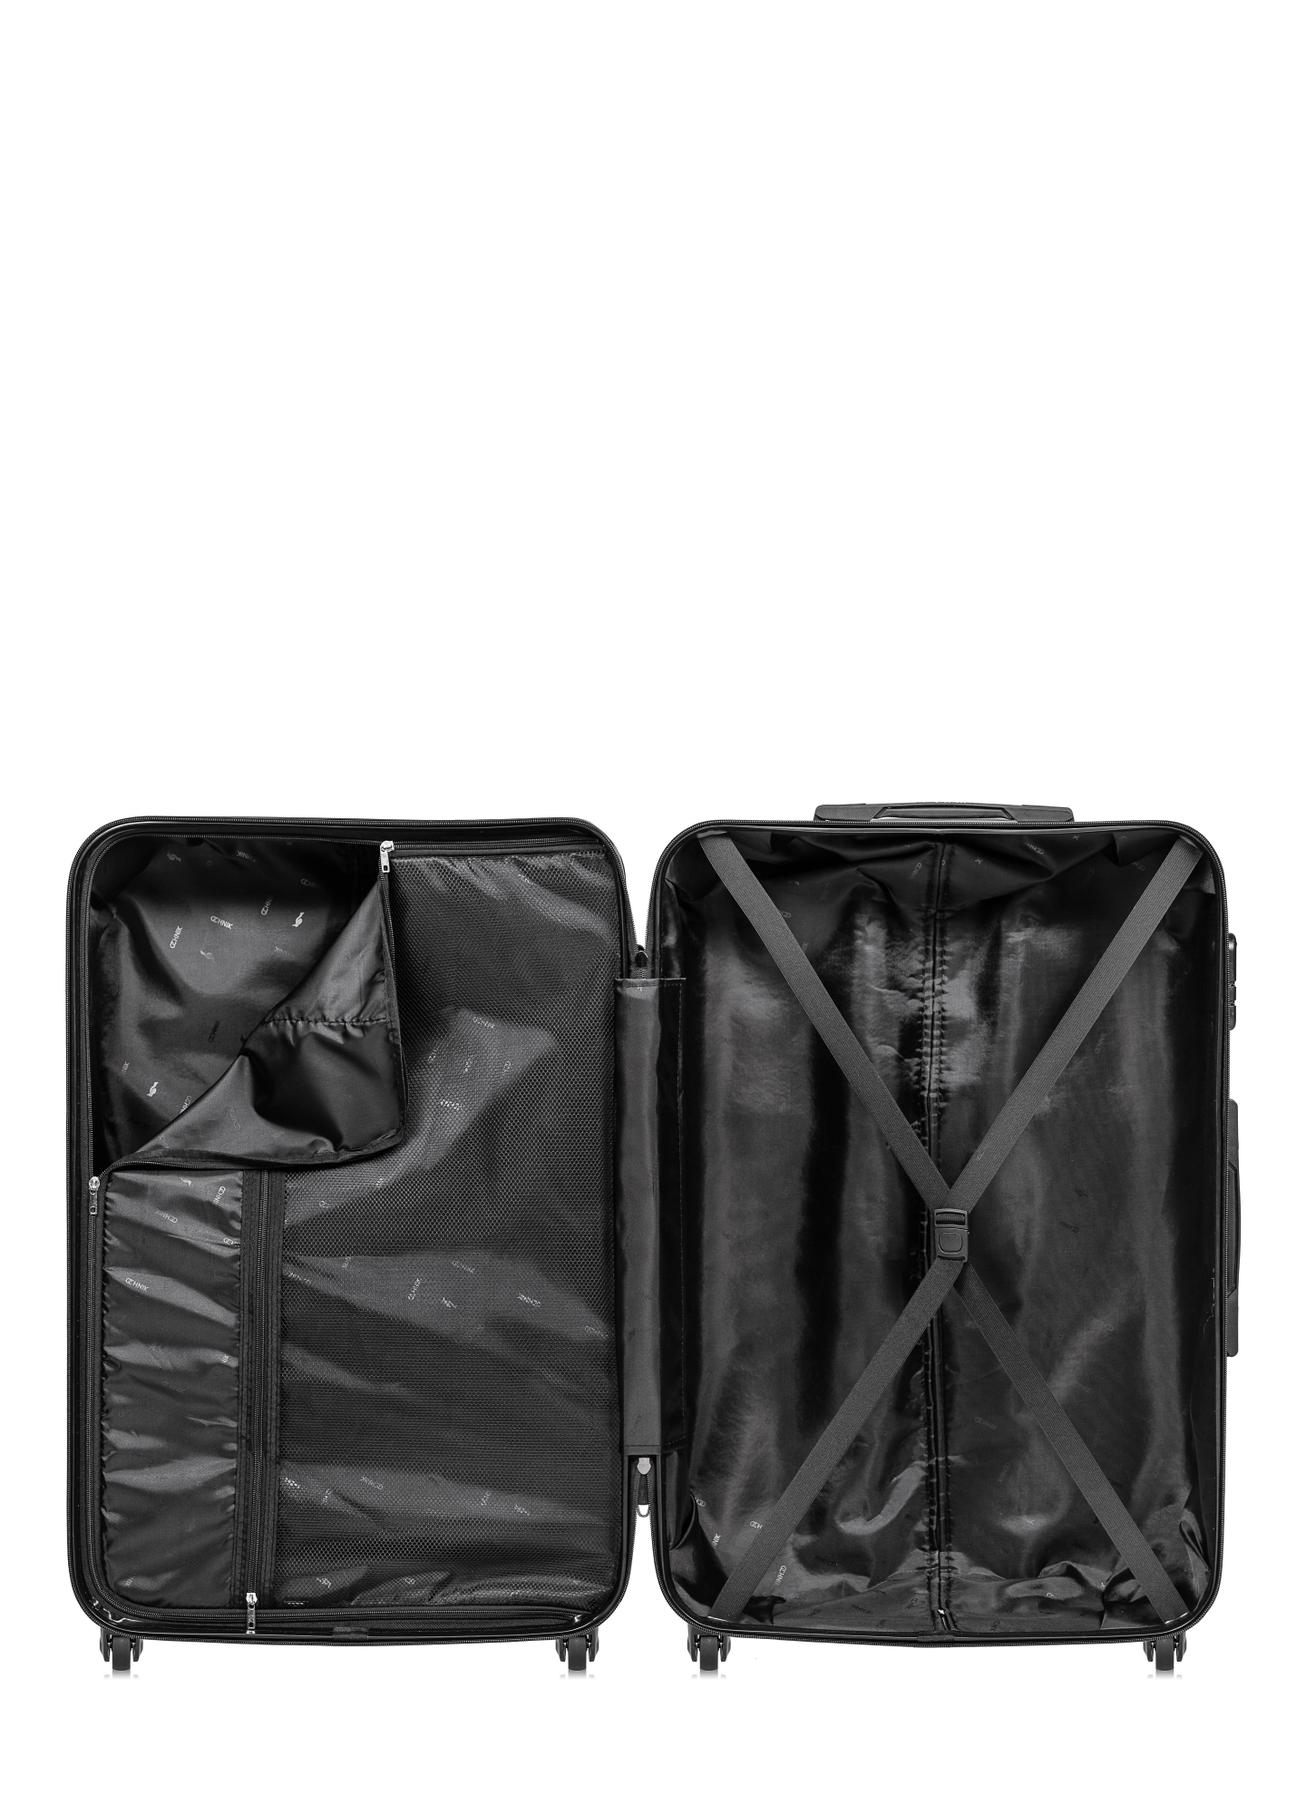 Komplet walizek na kółkach 19''/24''/28'' WALAB-0067-69(W24)